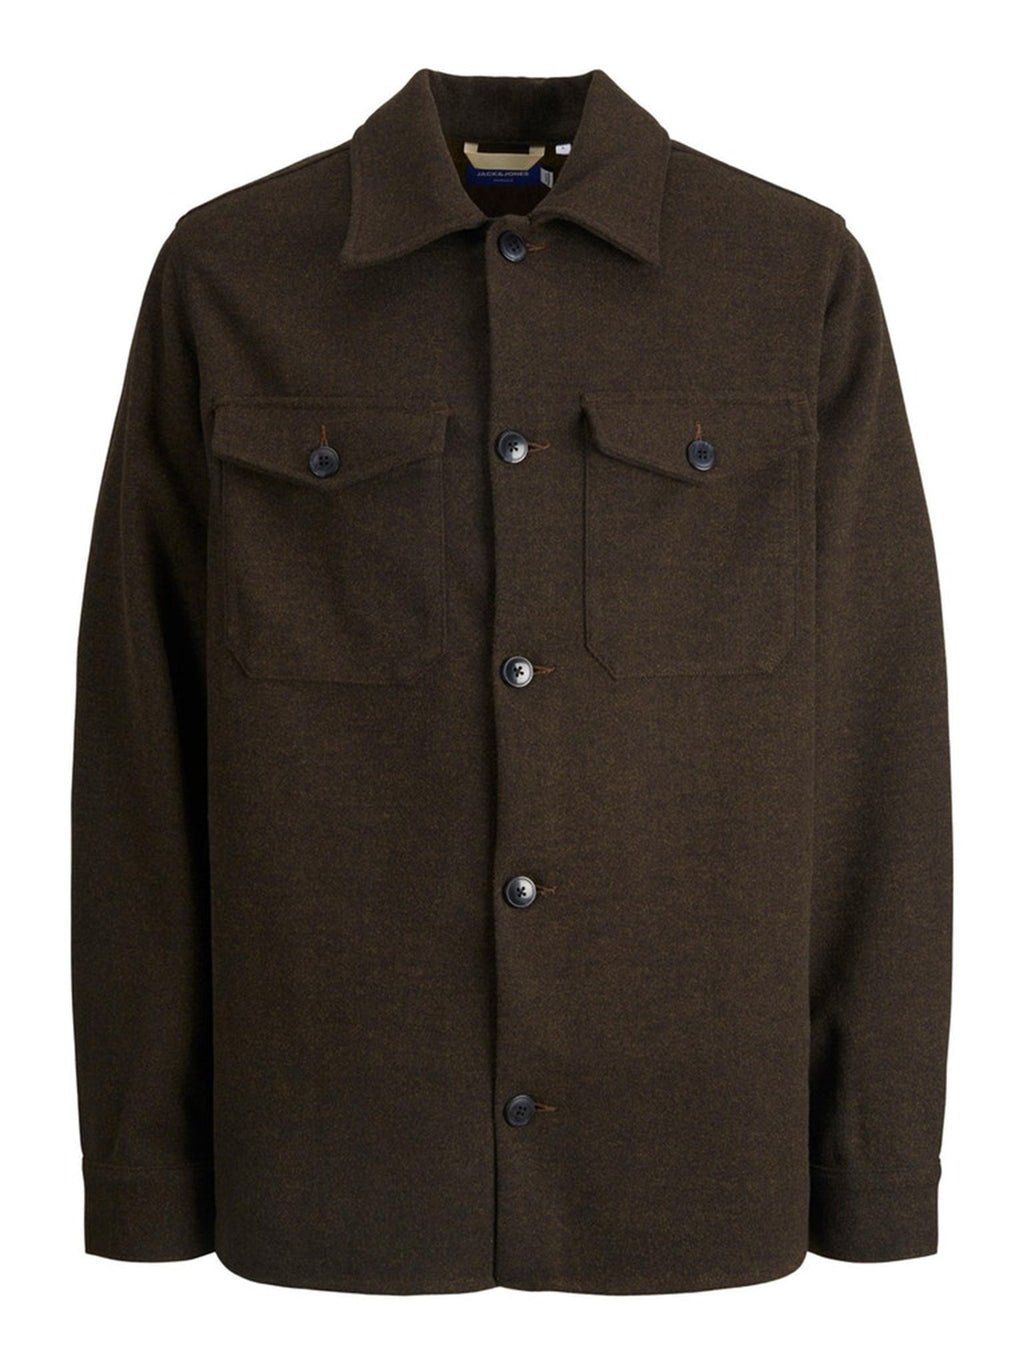 Ollie Shirt Jacket - Seal Brown